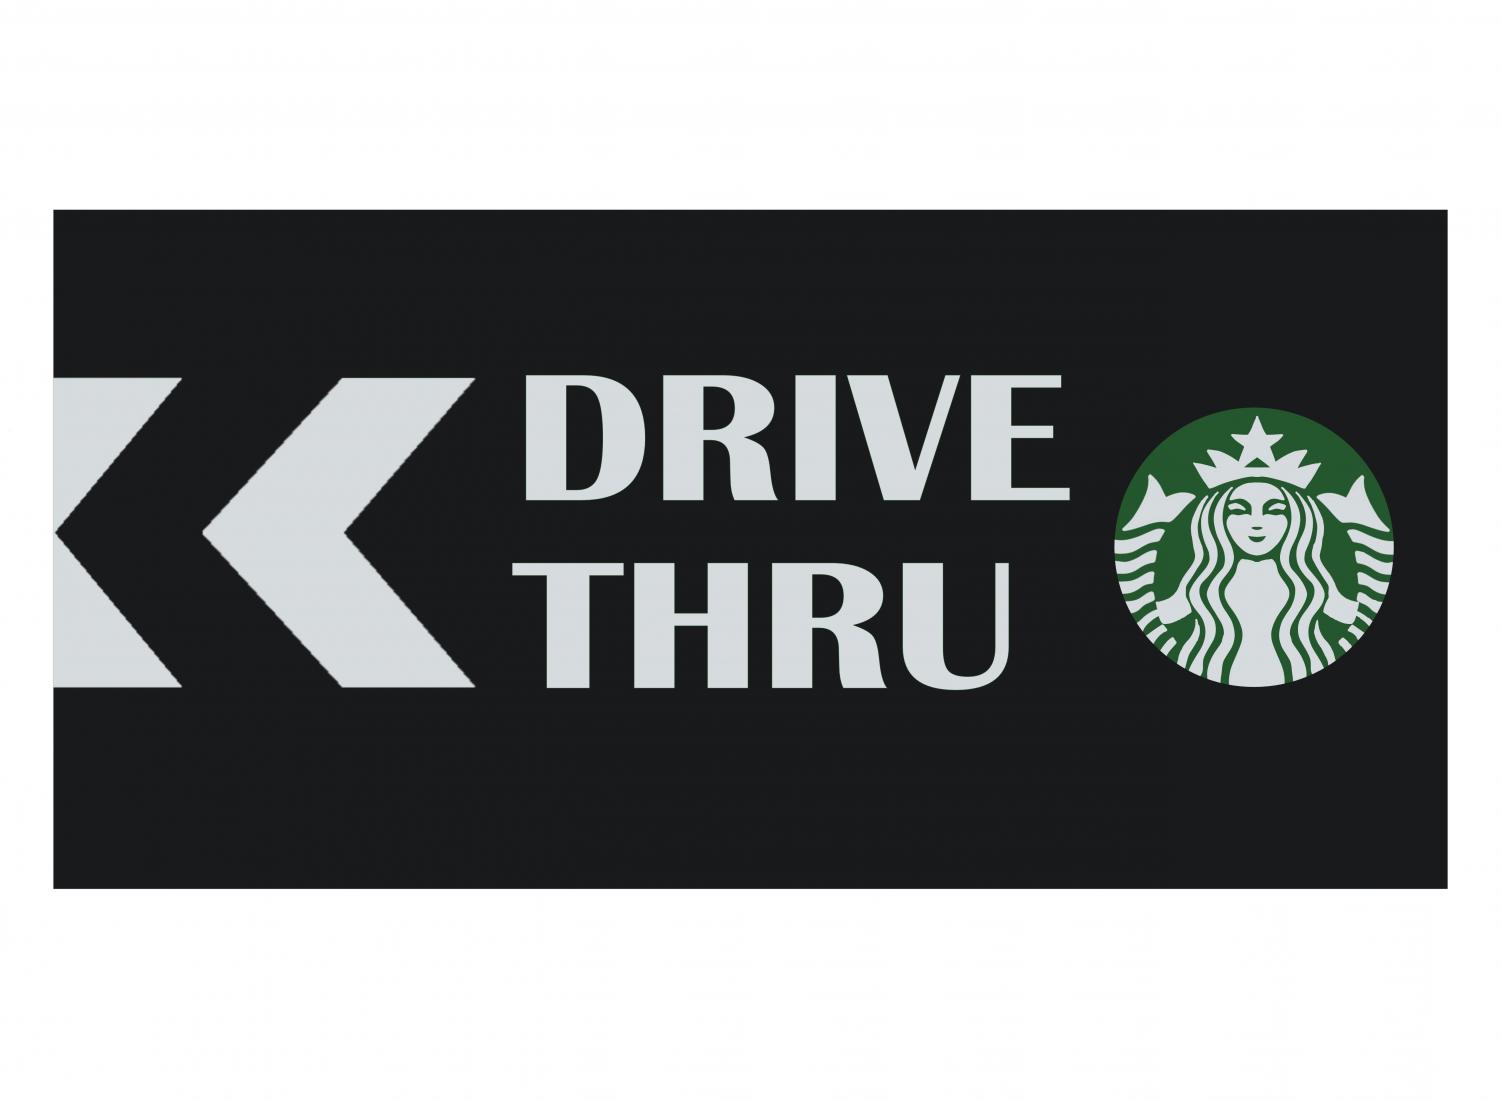 starbucks drive thru sign